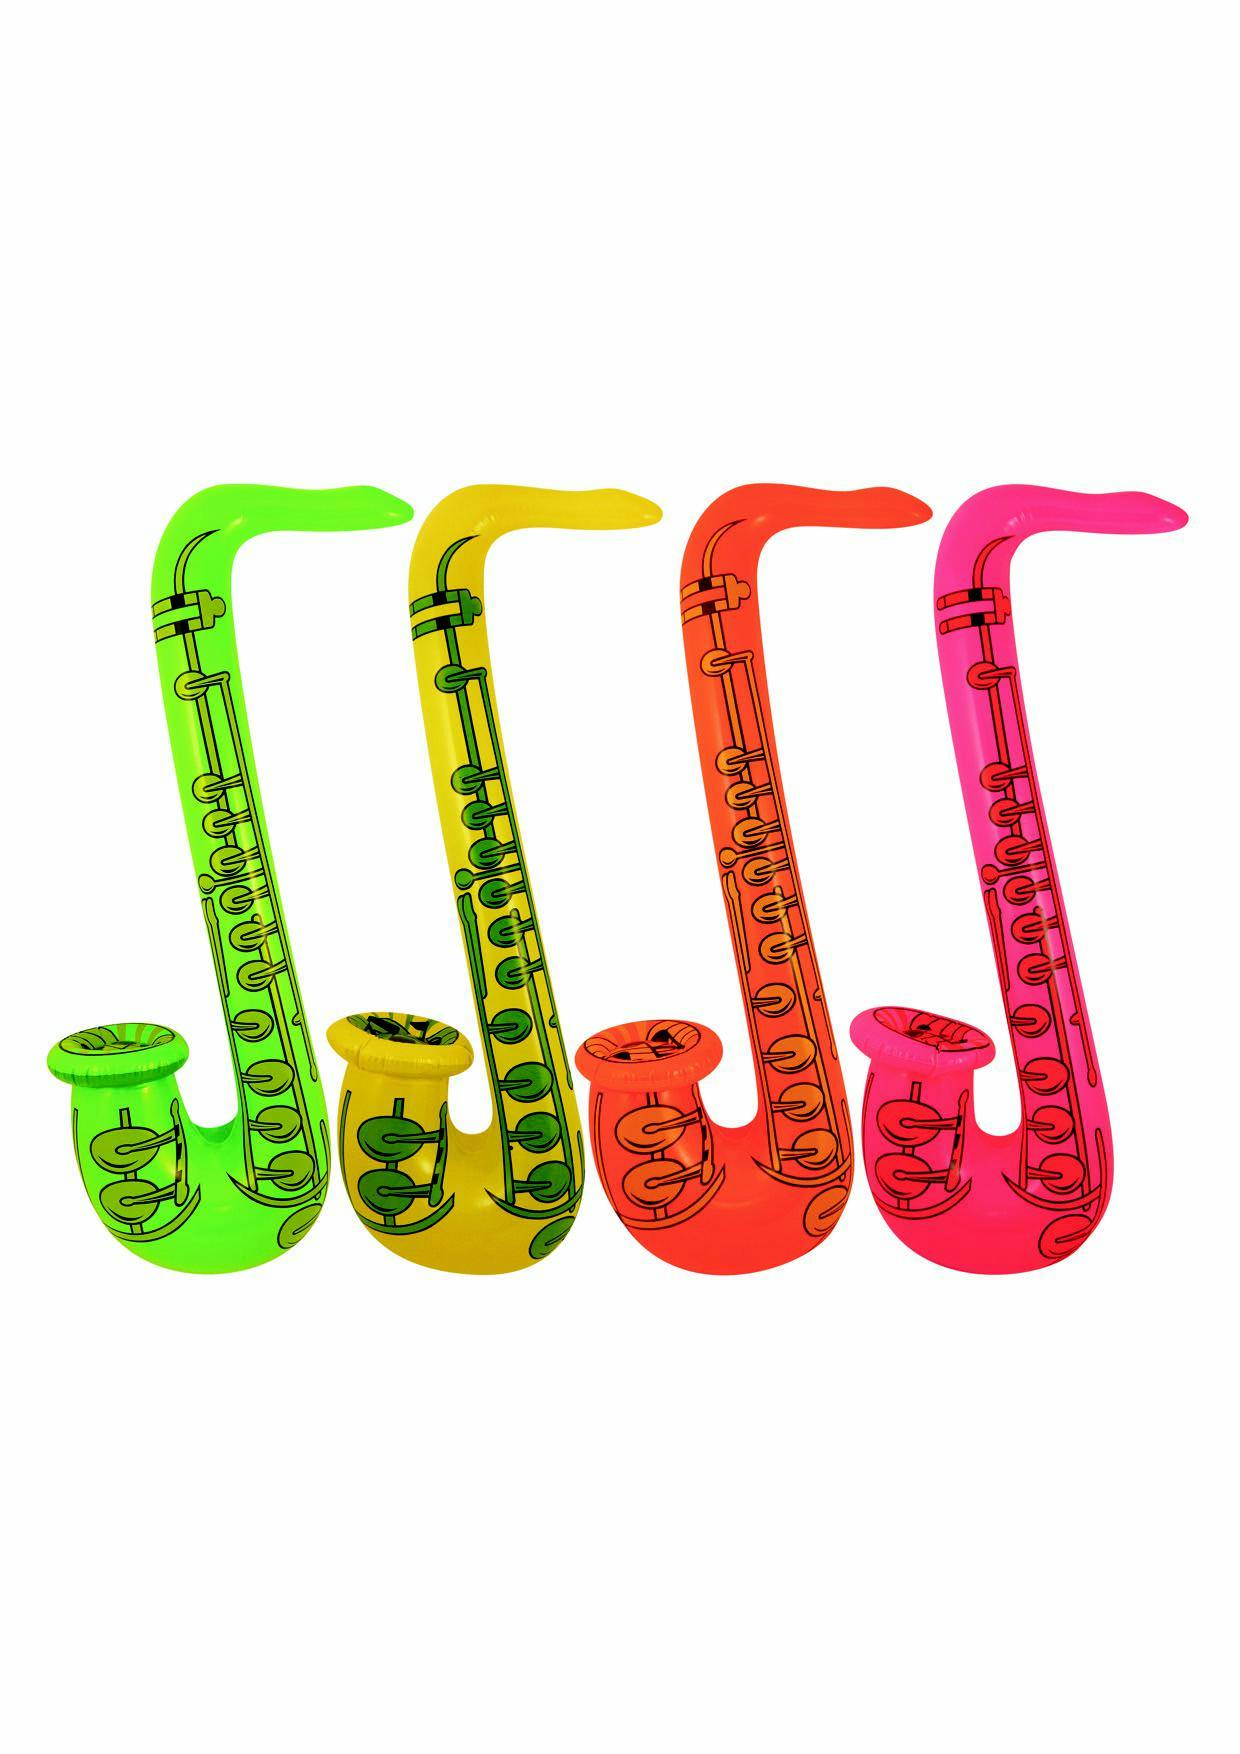 Product - Saxophone